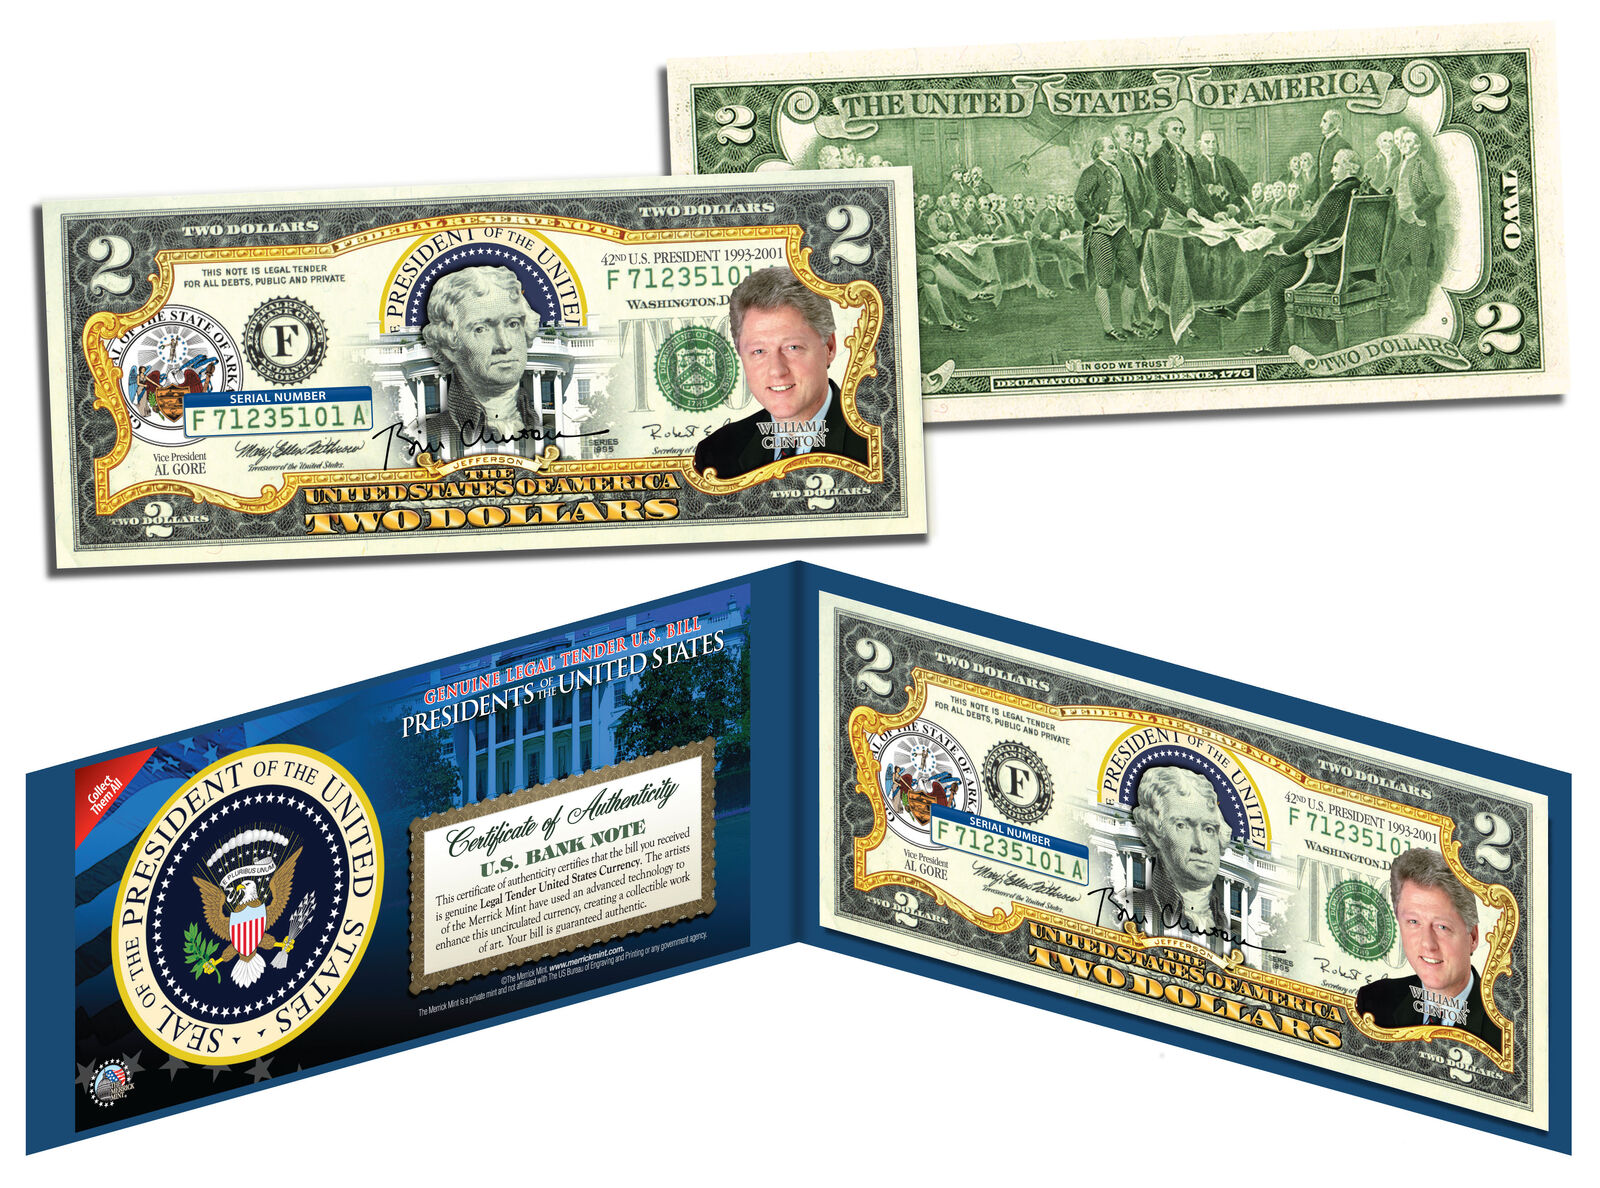 BILL CLINTON * 42nd U.S. President * Colorized $2 Bill US Genuine Legal Tender